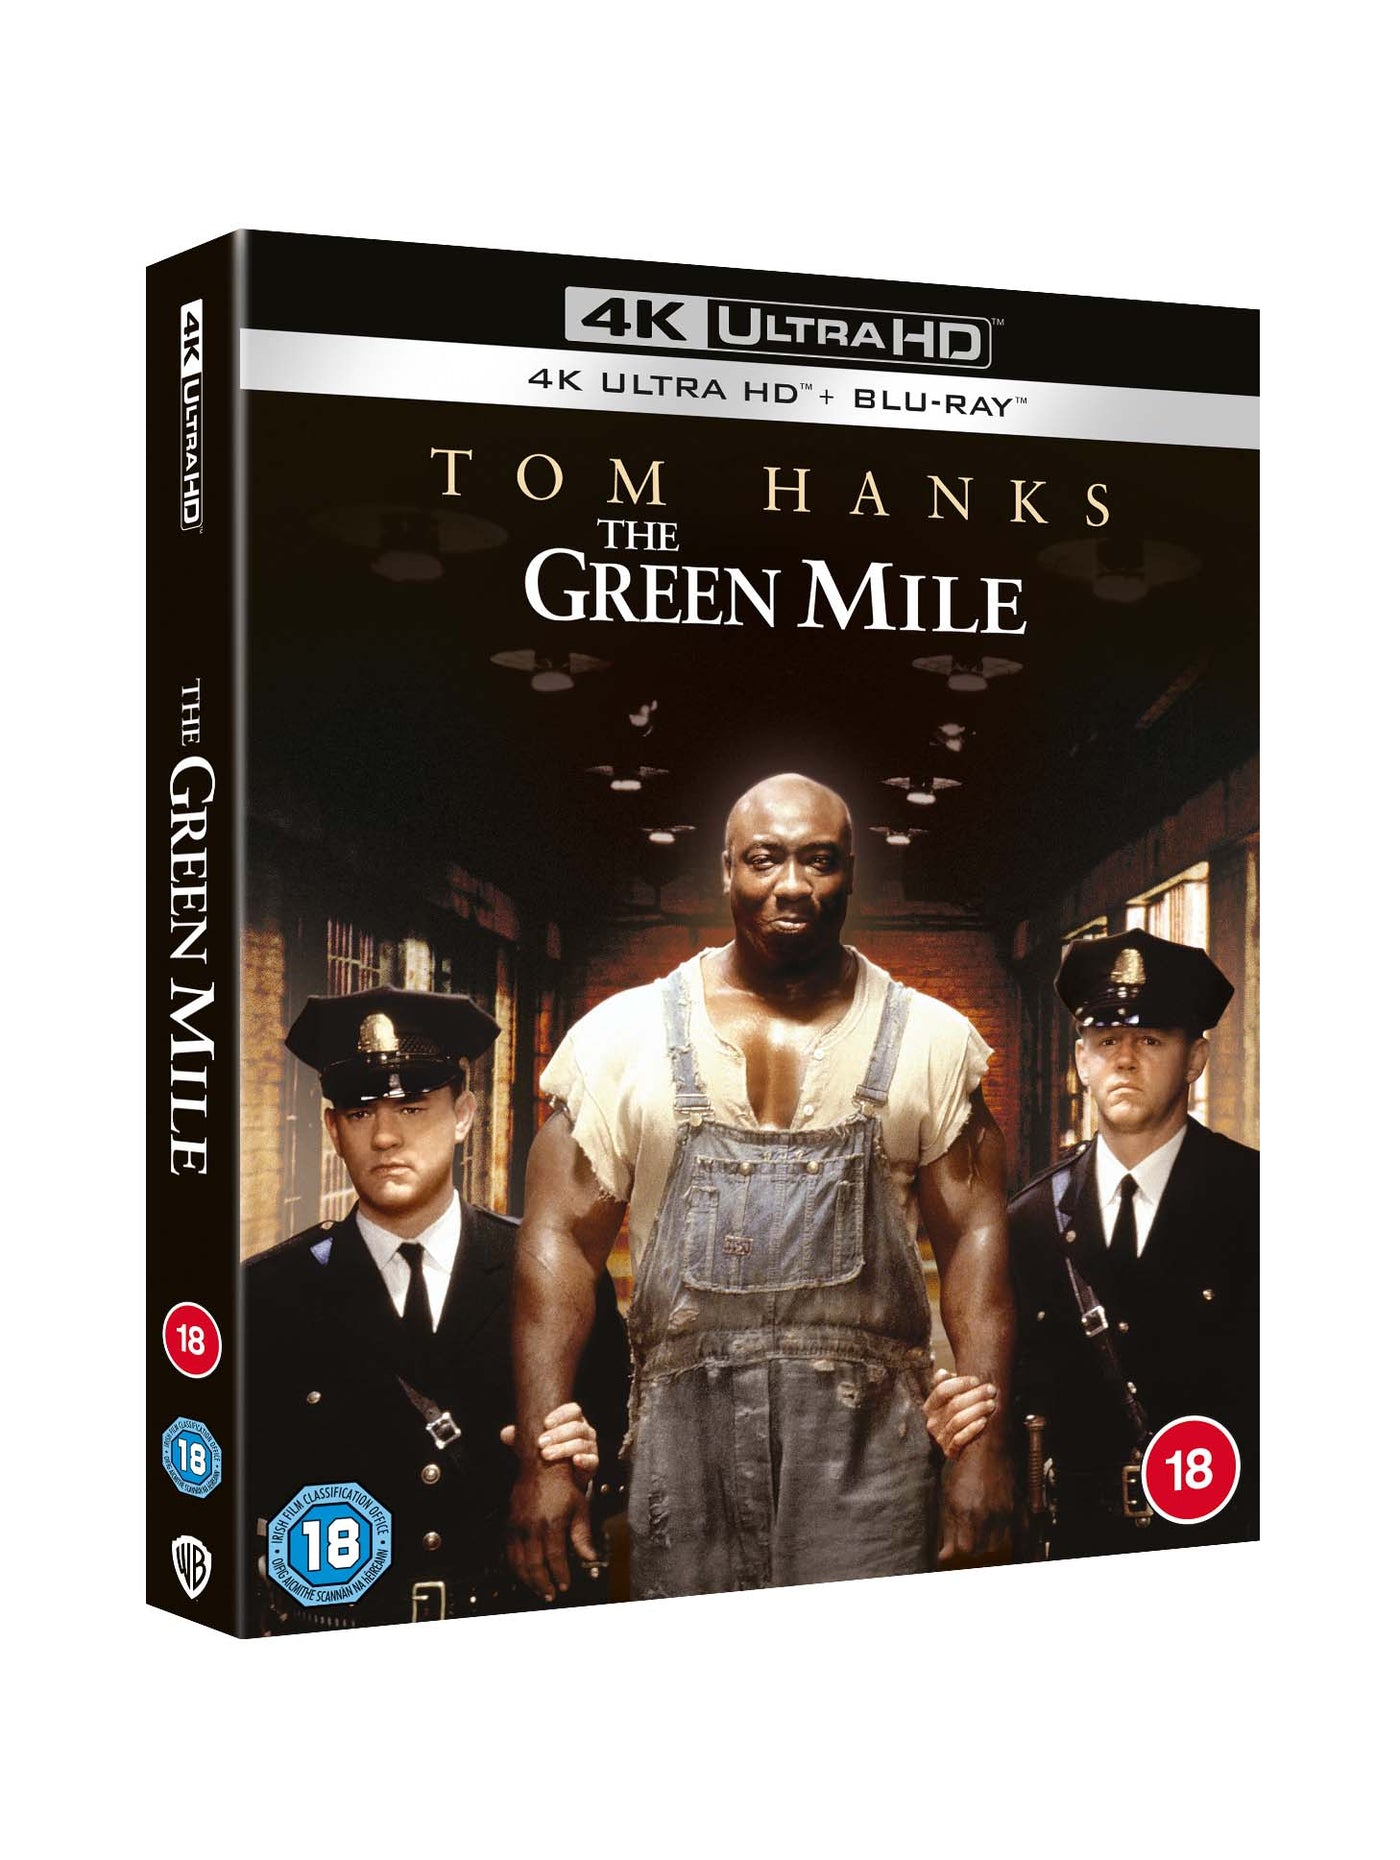 The Green Mile (4K Ultra HD) (1999)